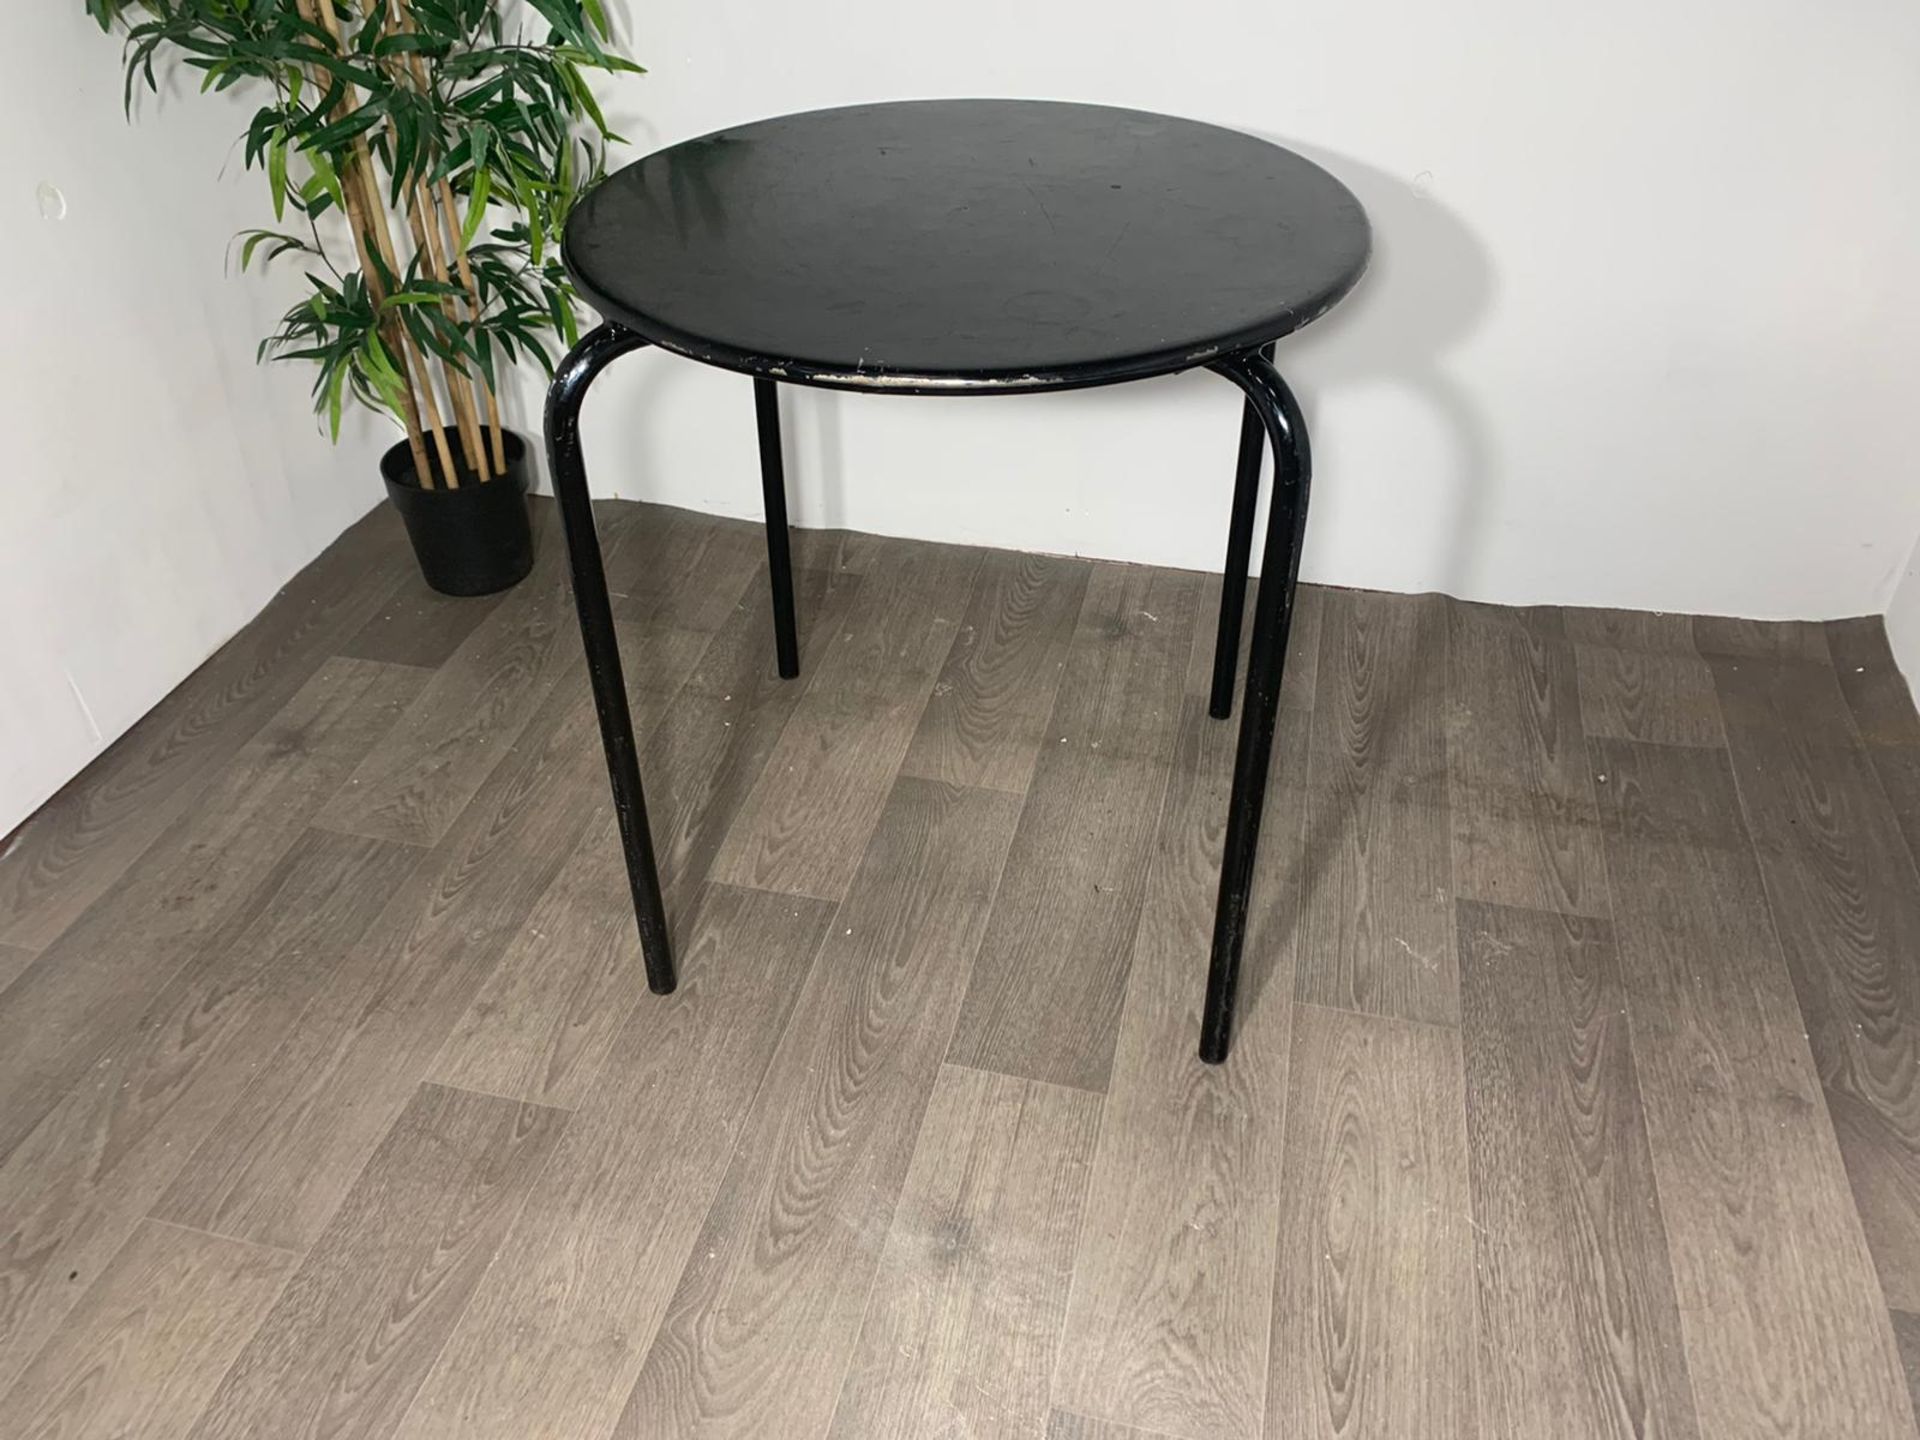 Steel Circular Black Table - Image 2 of 3